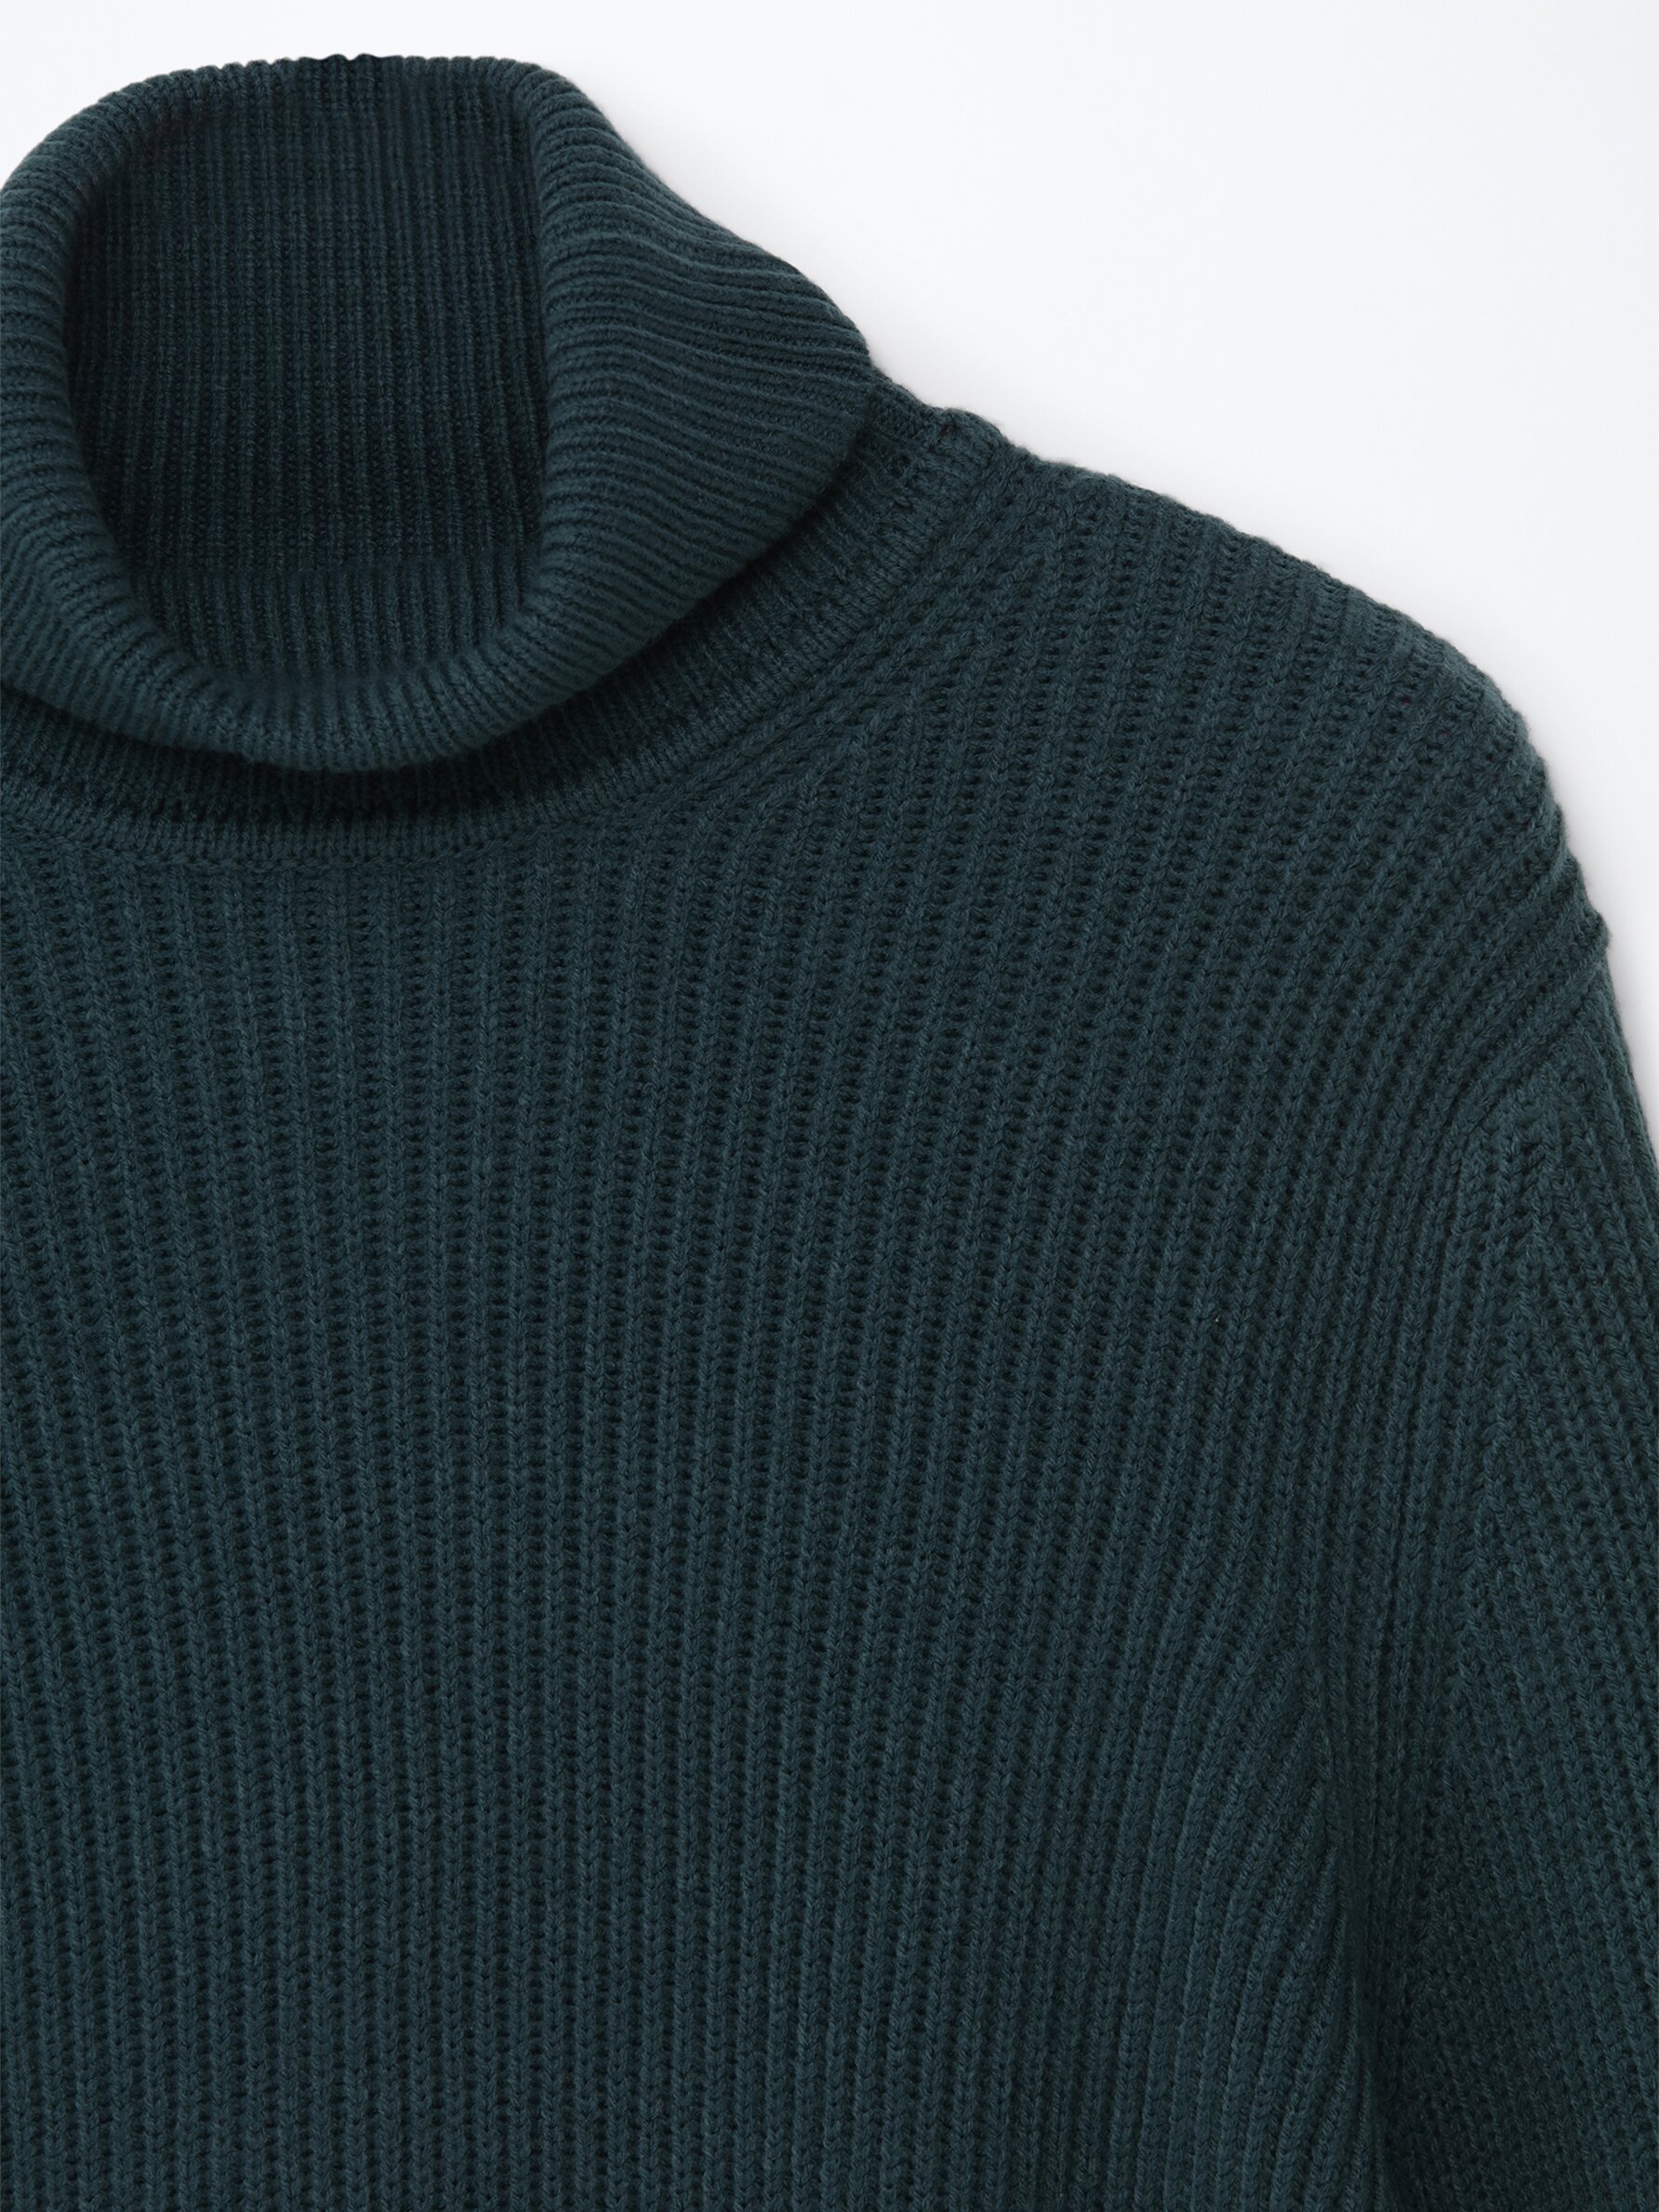 Chunky knit turtleneck sweater